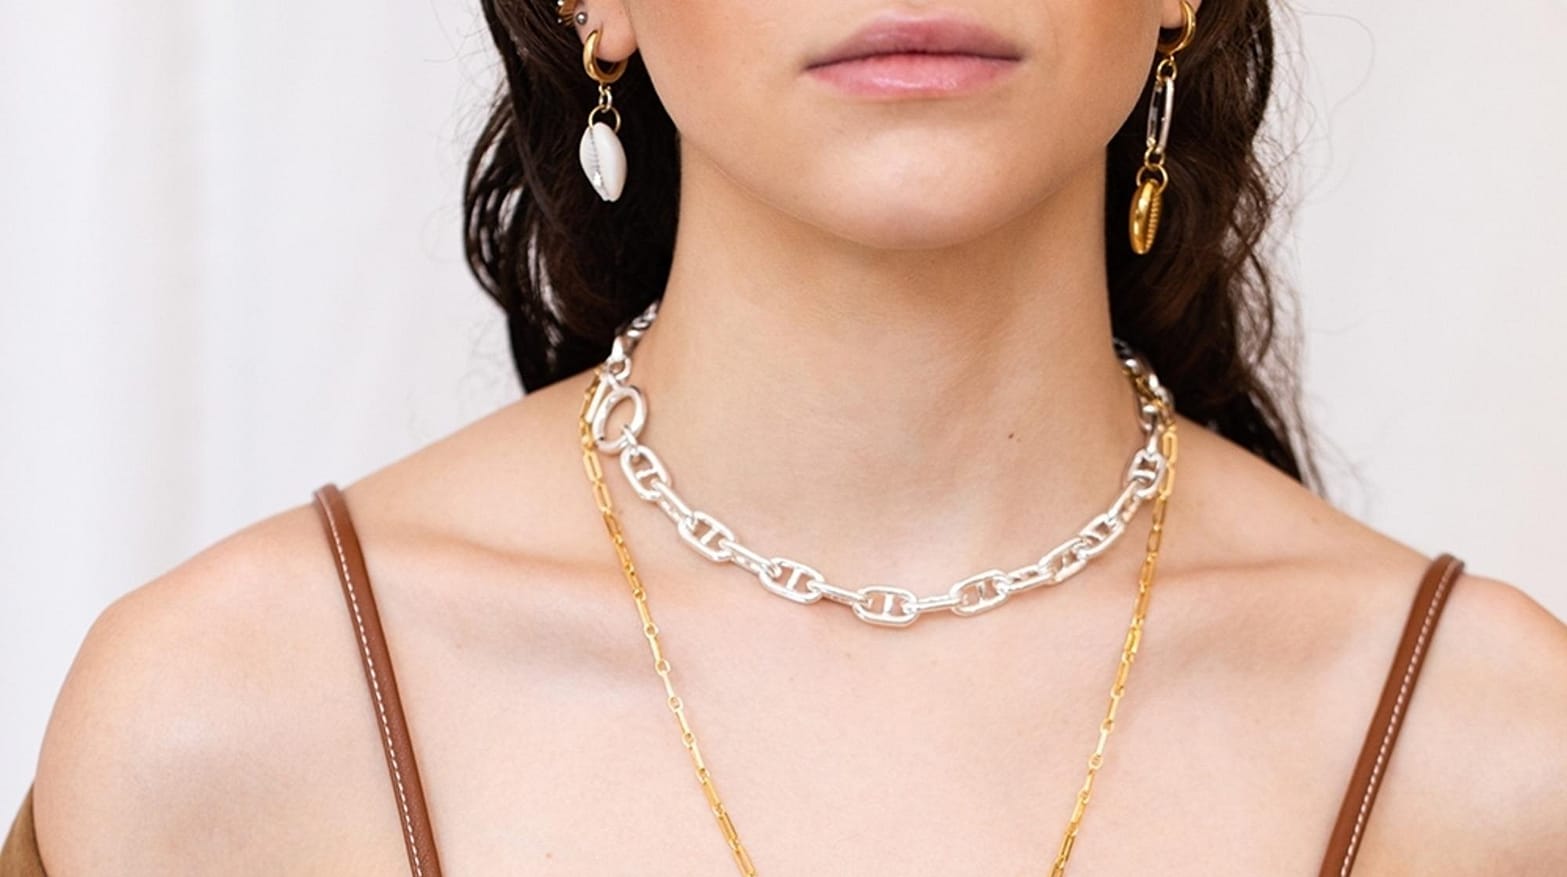 Woman wearing Minimalist necklace